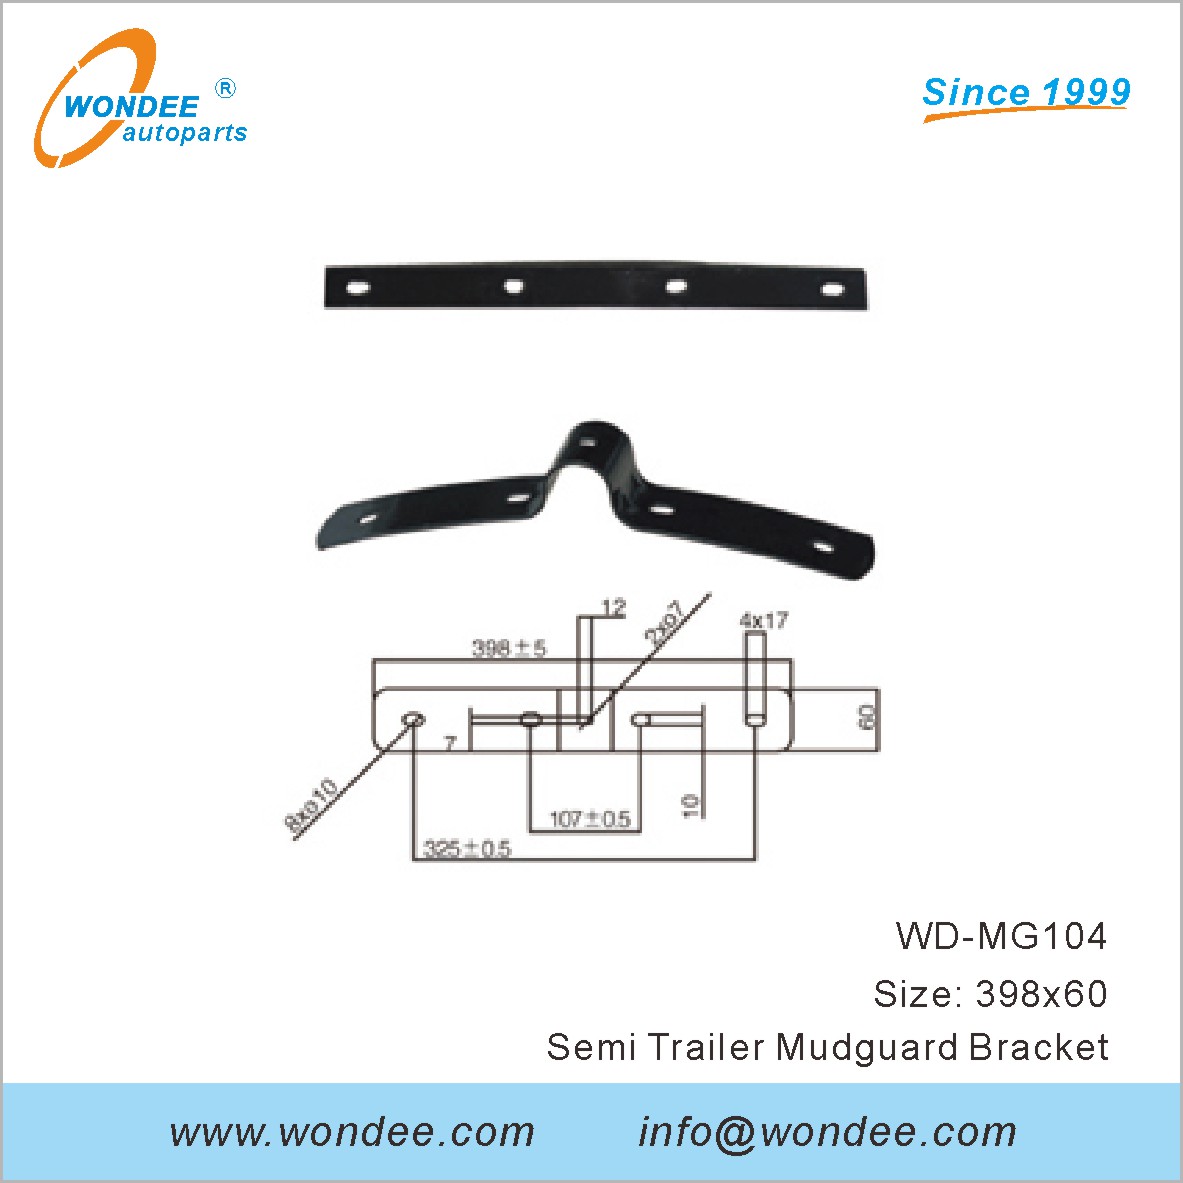 Mudguard bracket from WONDEE Autoparts (4)